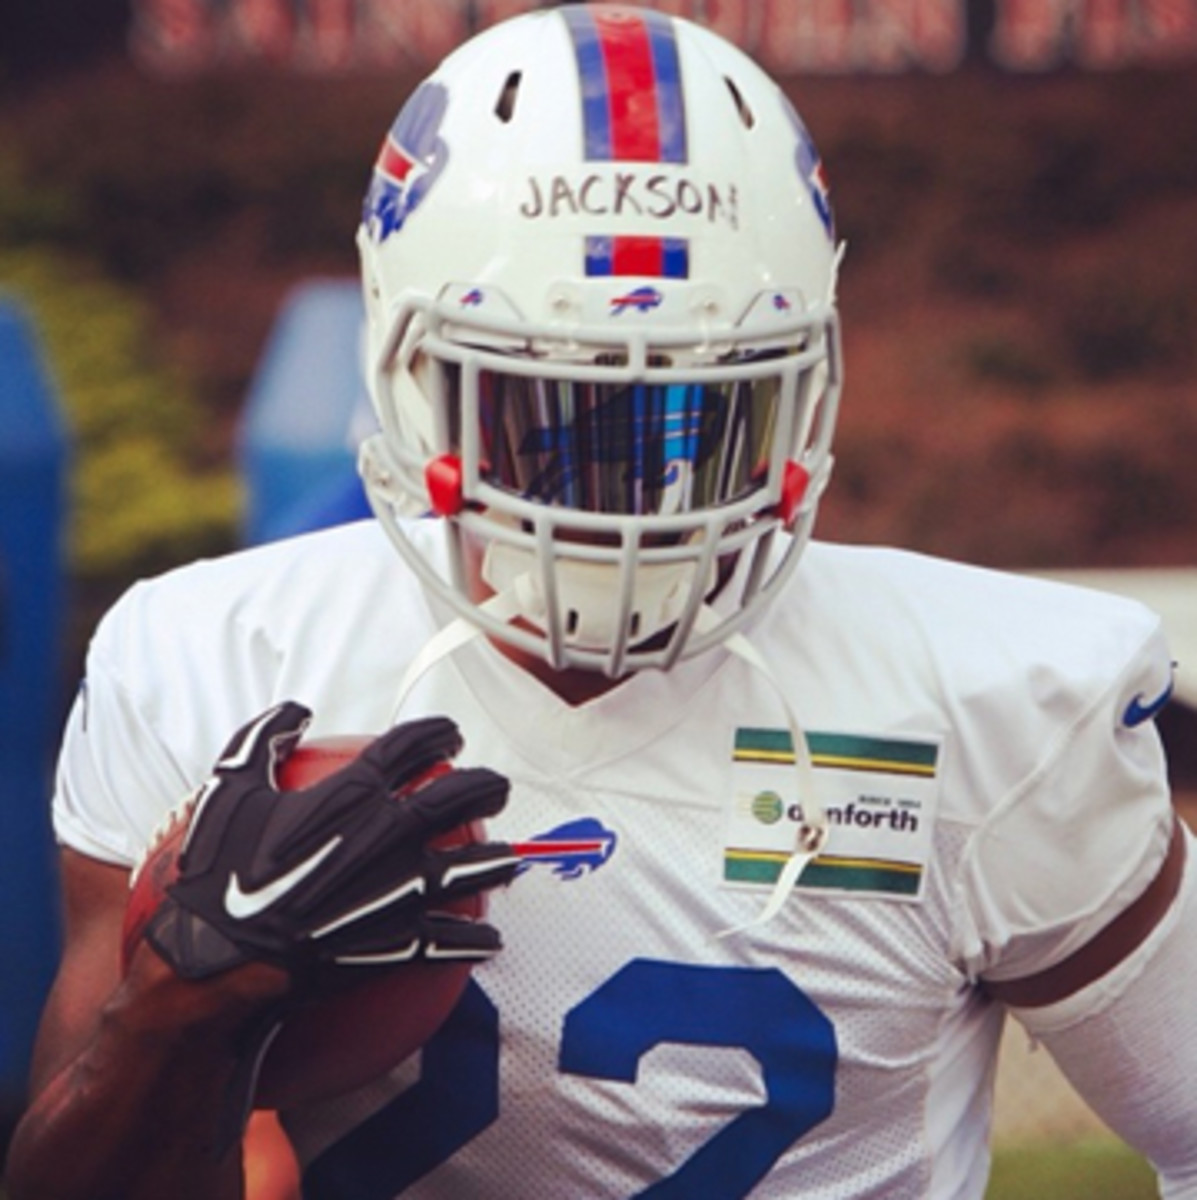 Fred Jackson was looking good in a Bills logo visor, courtesy of Mazurek (via instagram.com/TheMMQB)